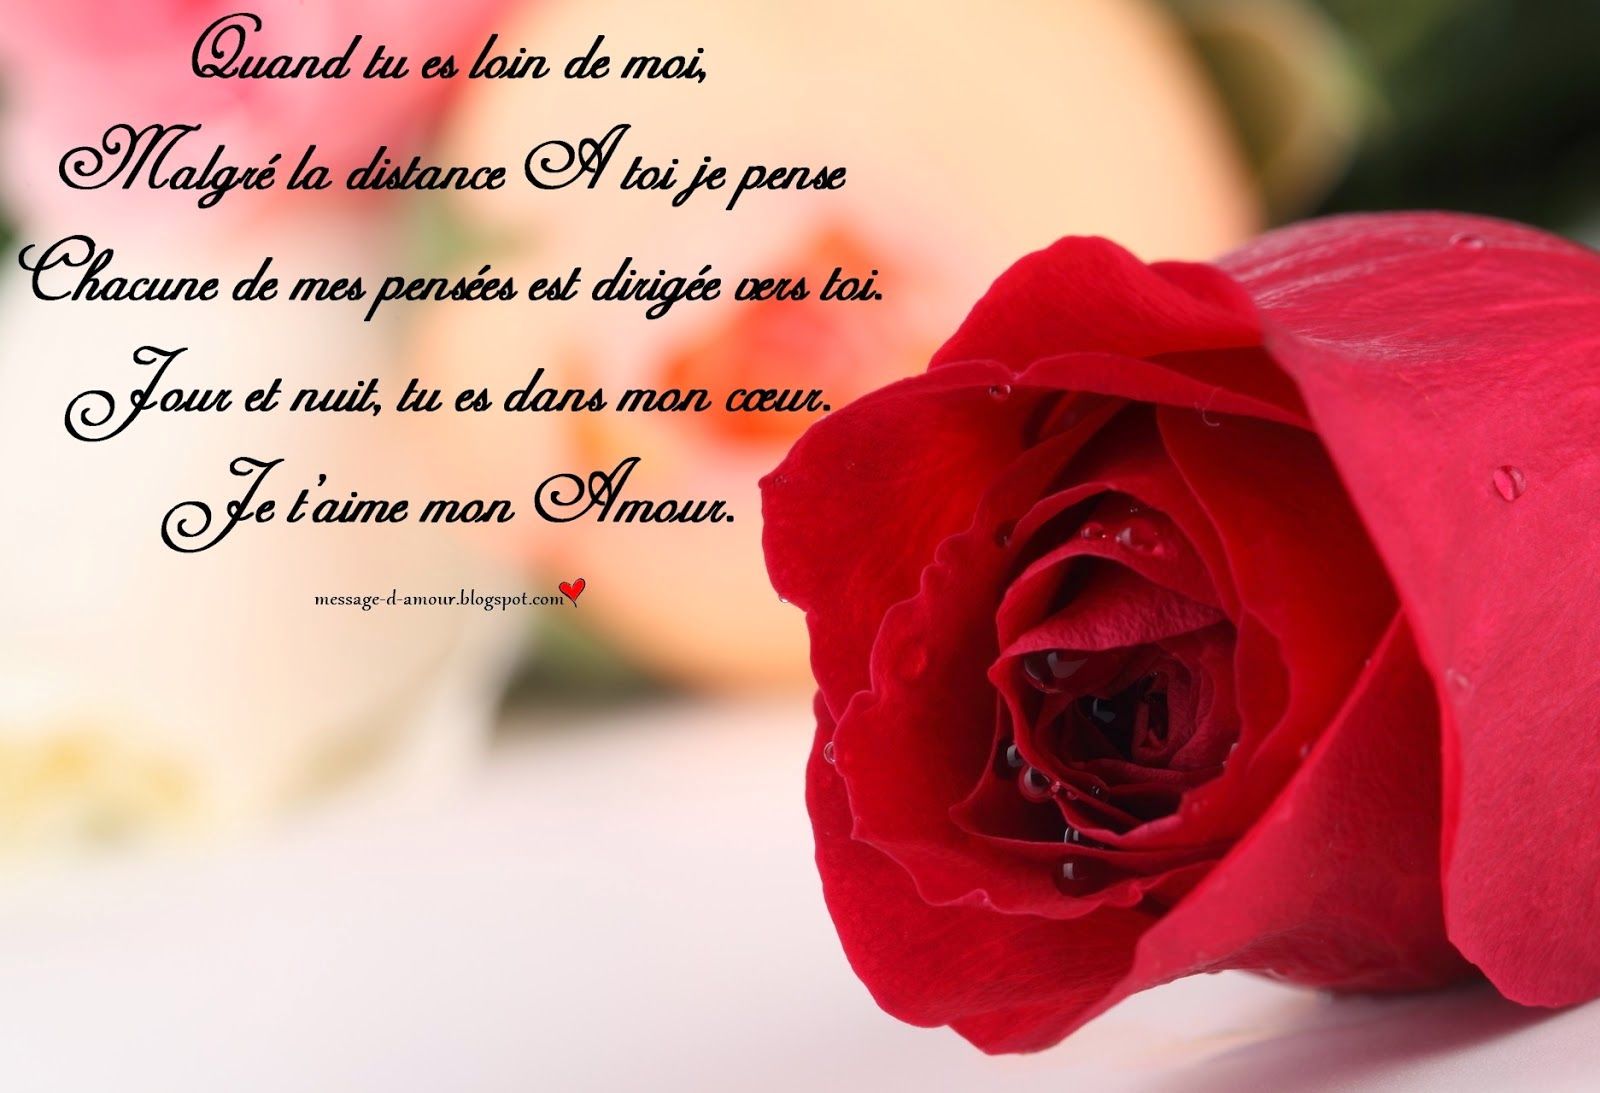 Pin by Mathéo Jade Pruvost on Poèmes et citations | Rose, Messages, Saint valentin